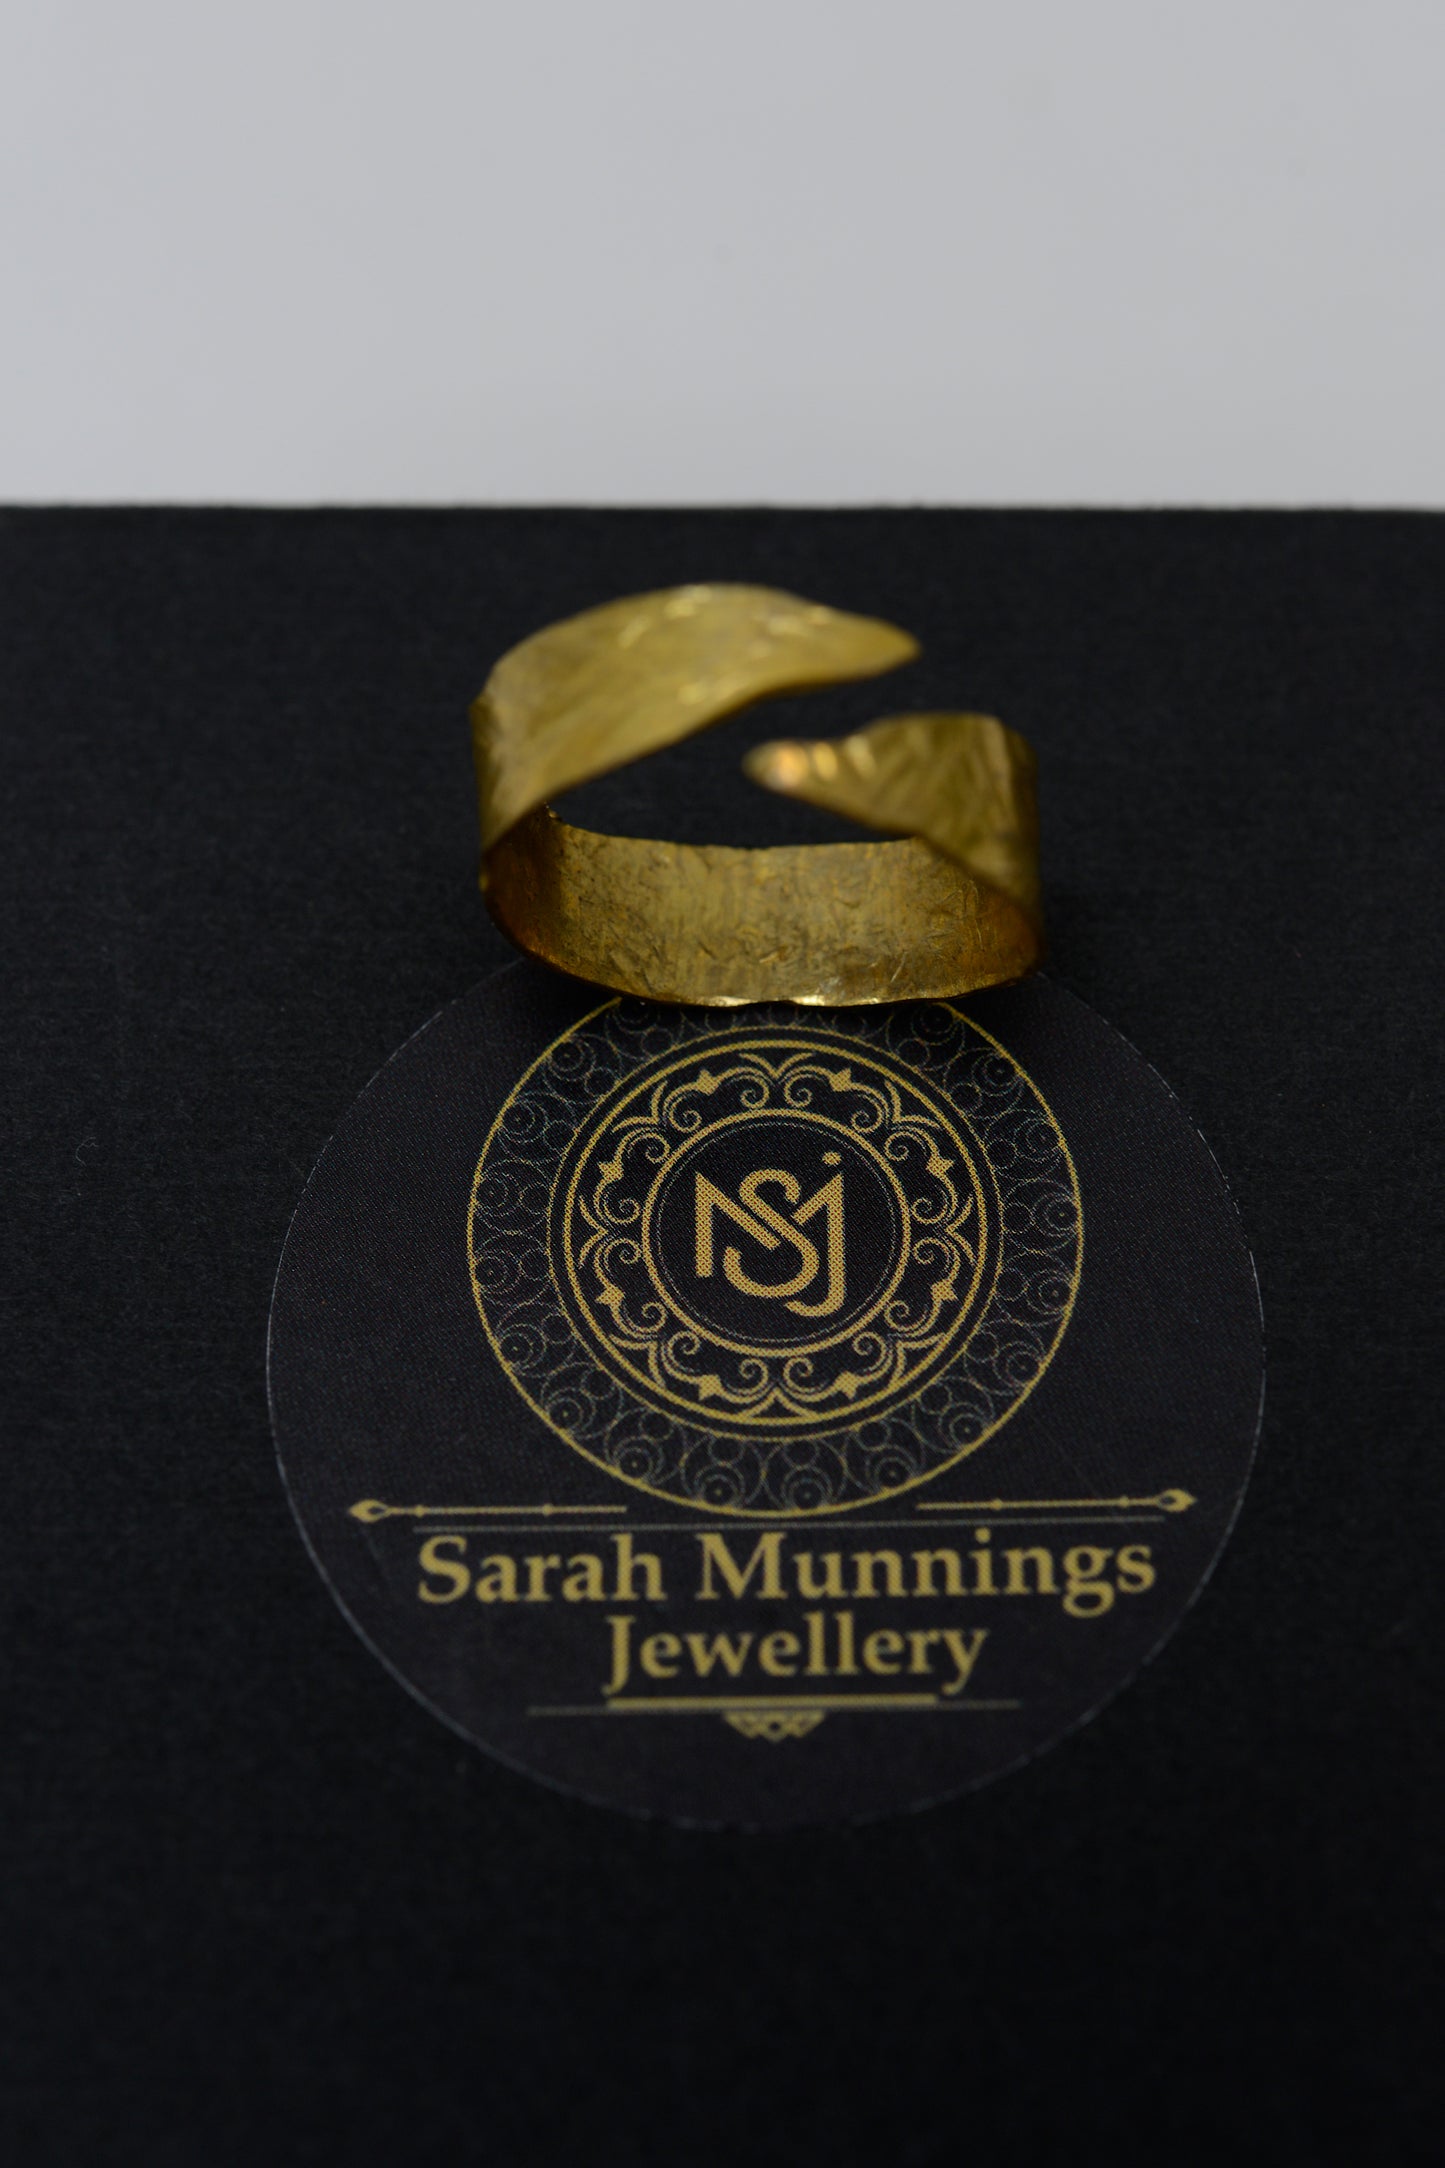 Grove - Sarah Munnings Jewellery